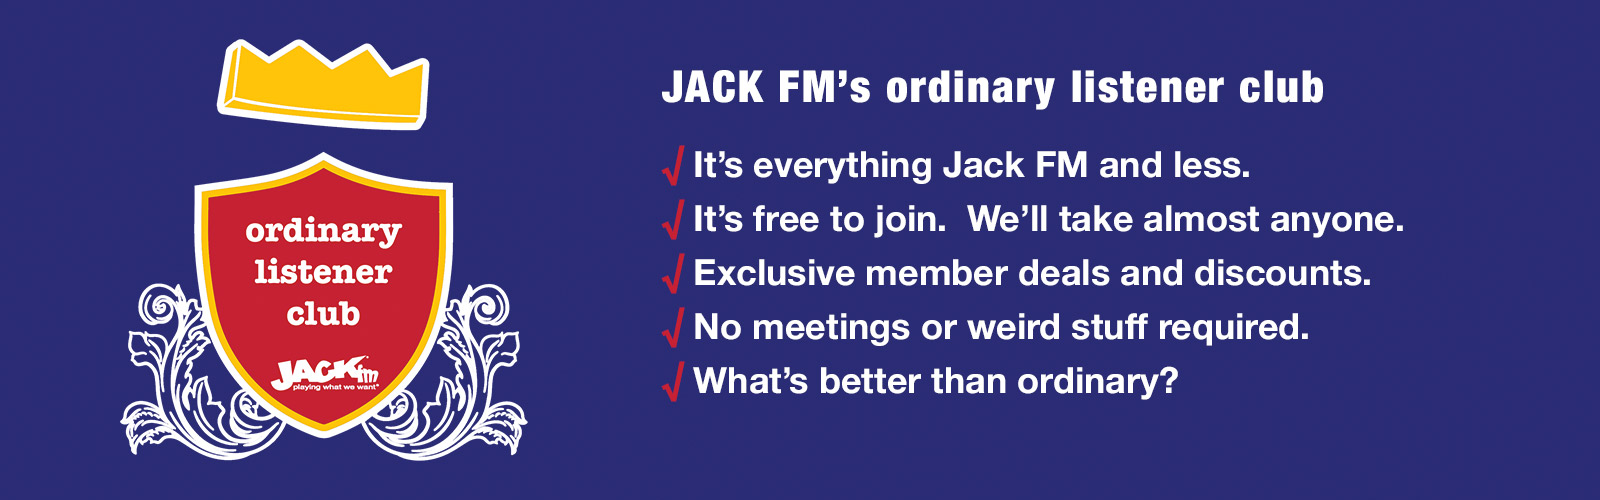 Jack FM Ordinary Listener Club coming soon promo